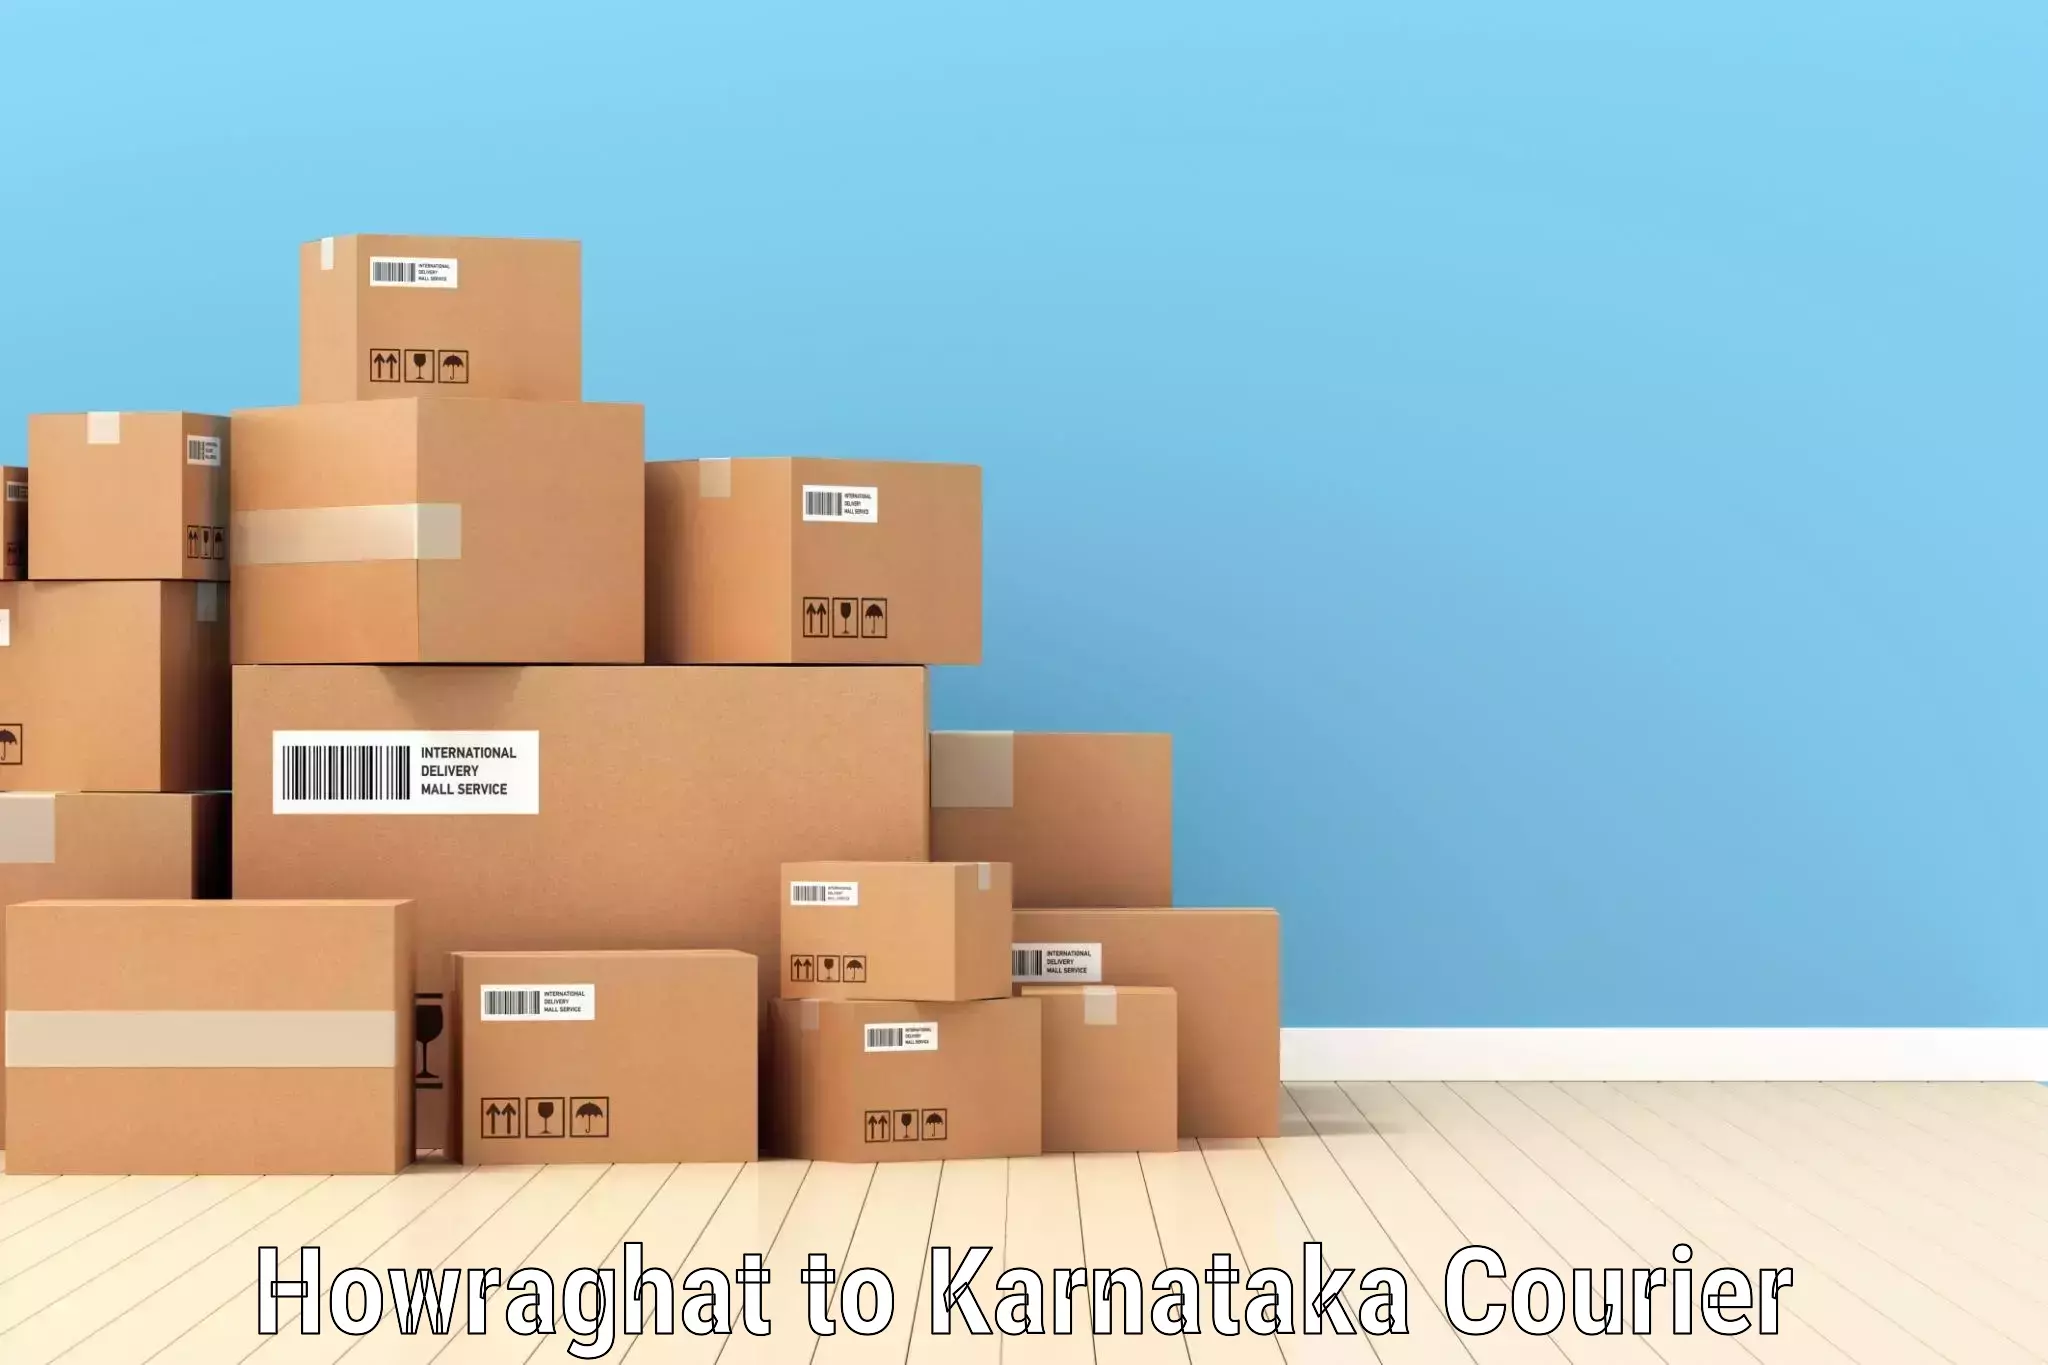 Secure package delivery Howraghat to Karnataka